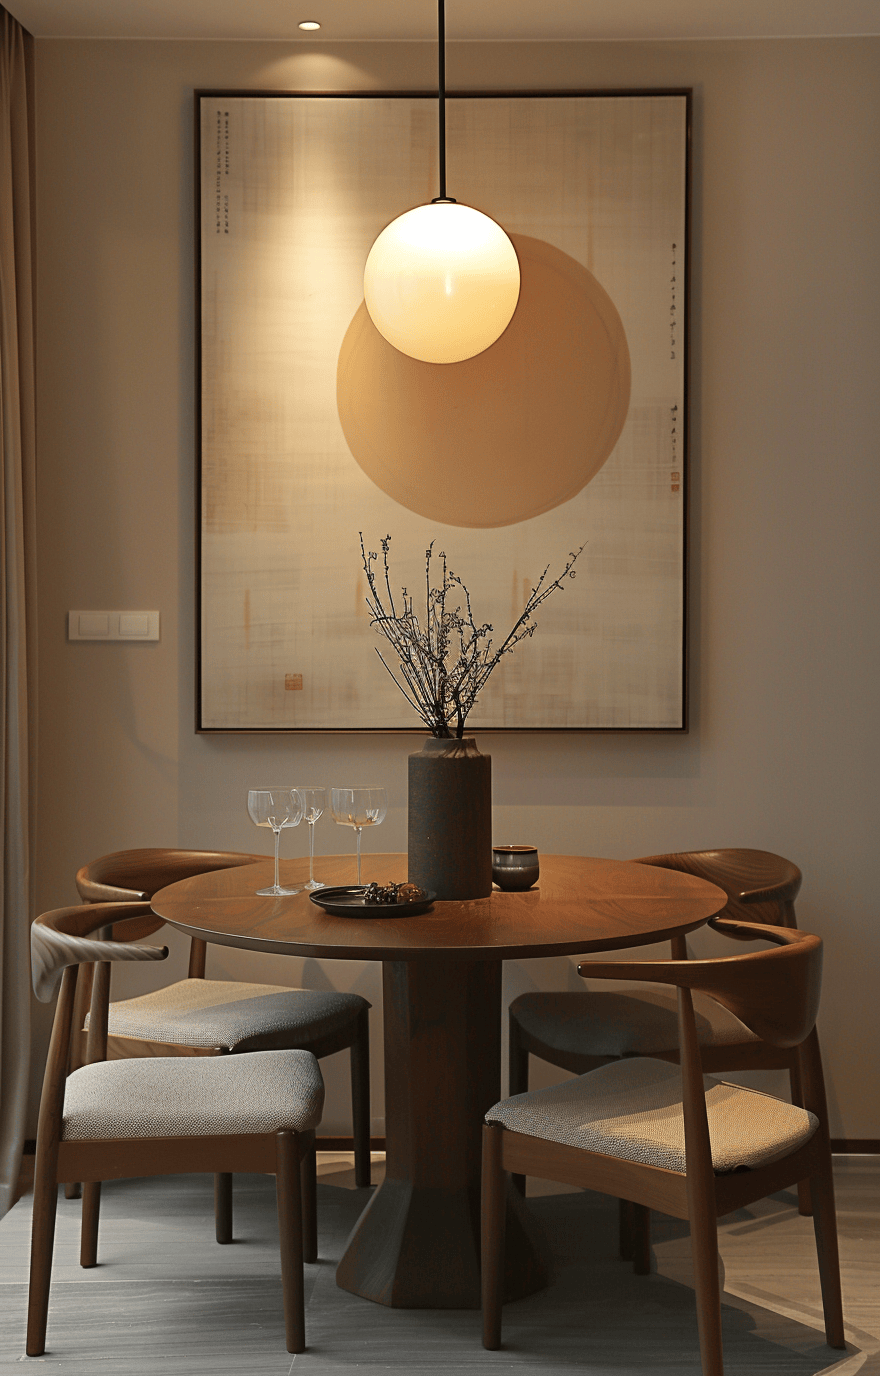 Nordic textiles adding coziness to a Japandi dining room design